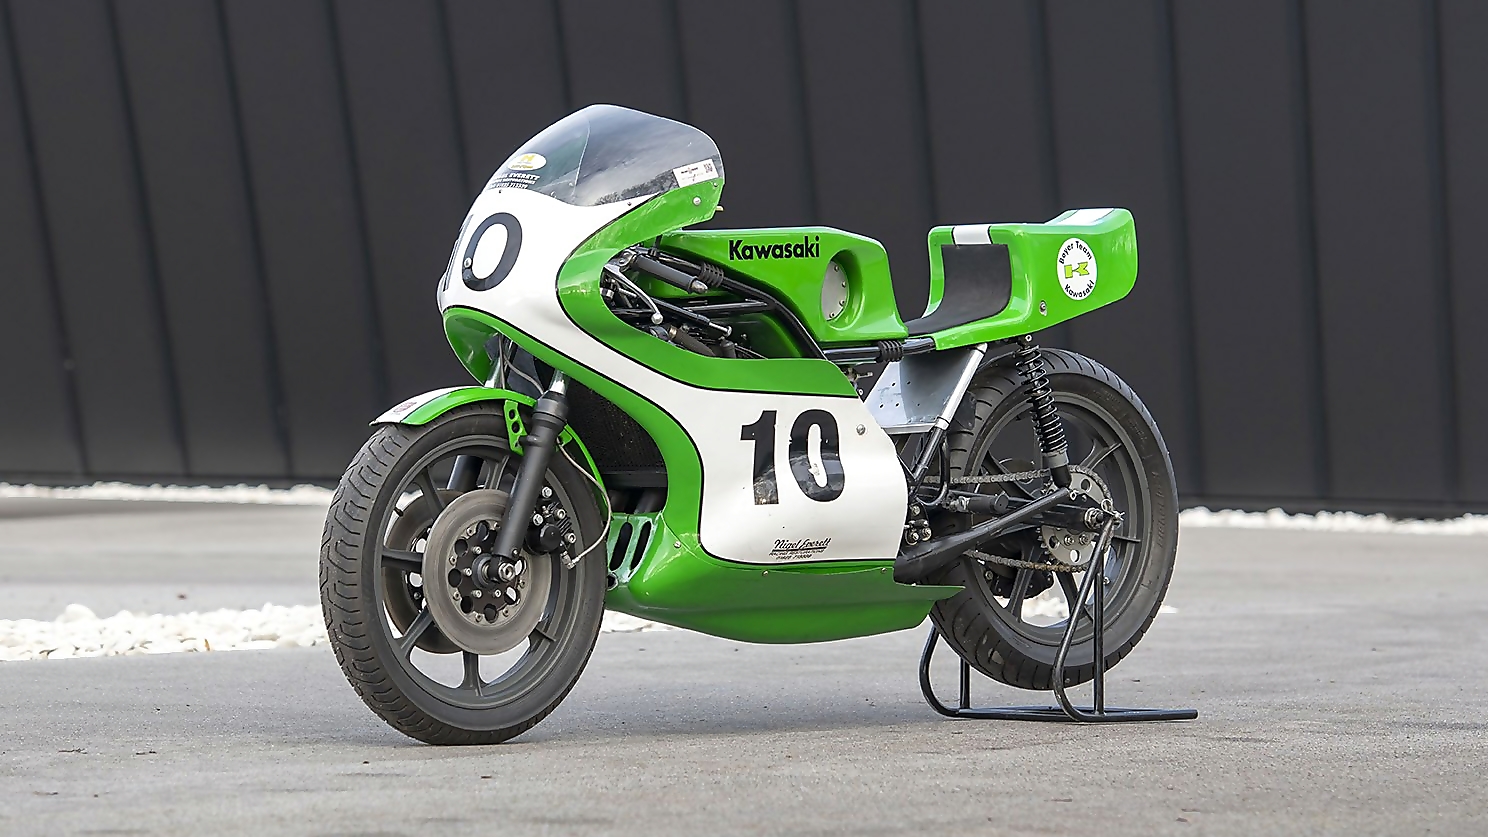 1975 KR750 Green Meanie